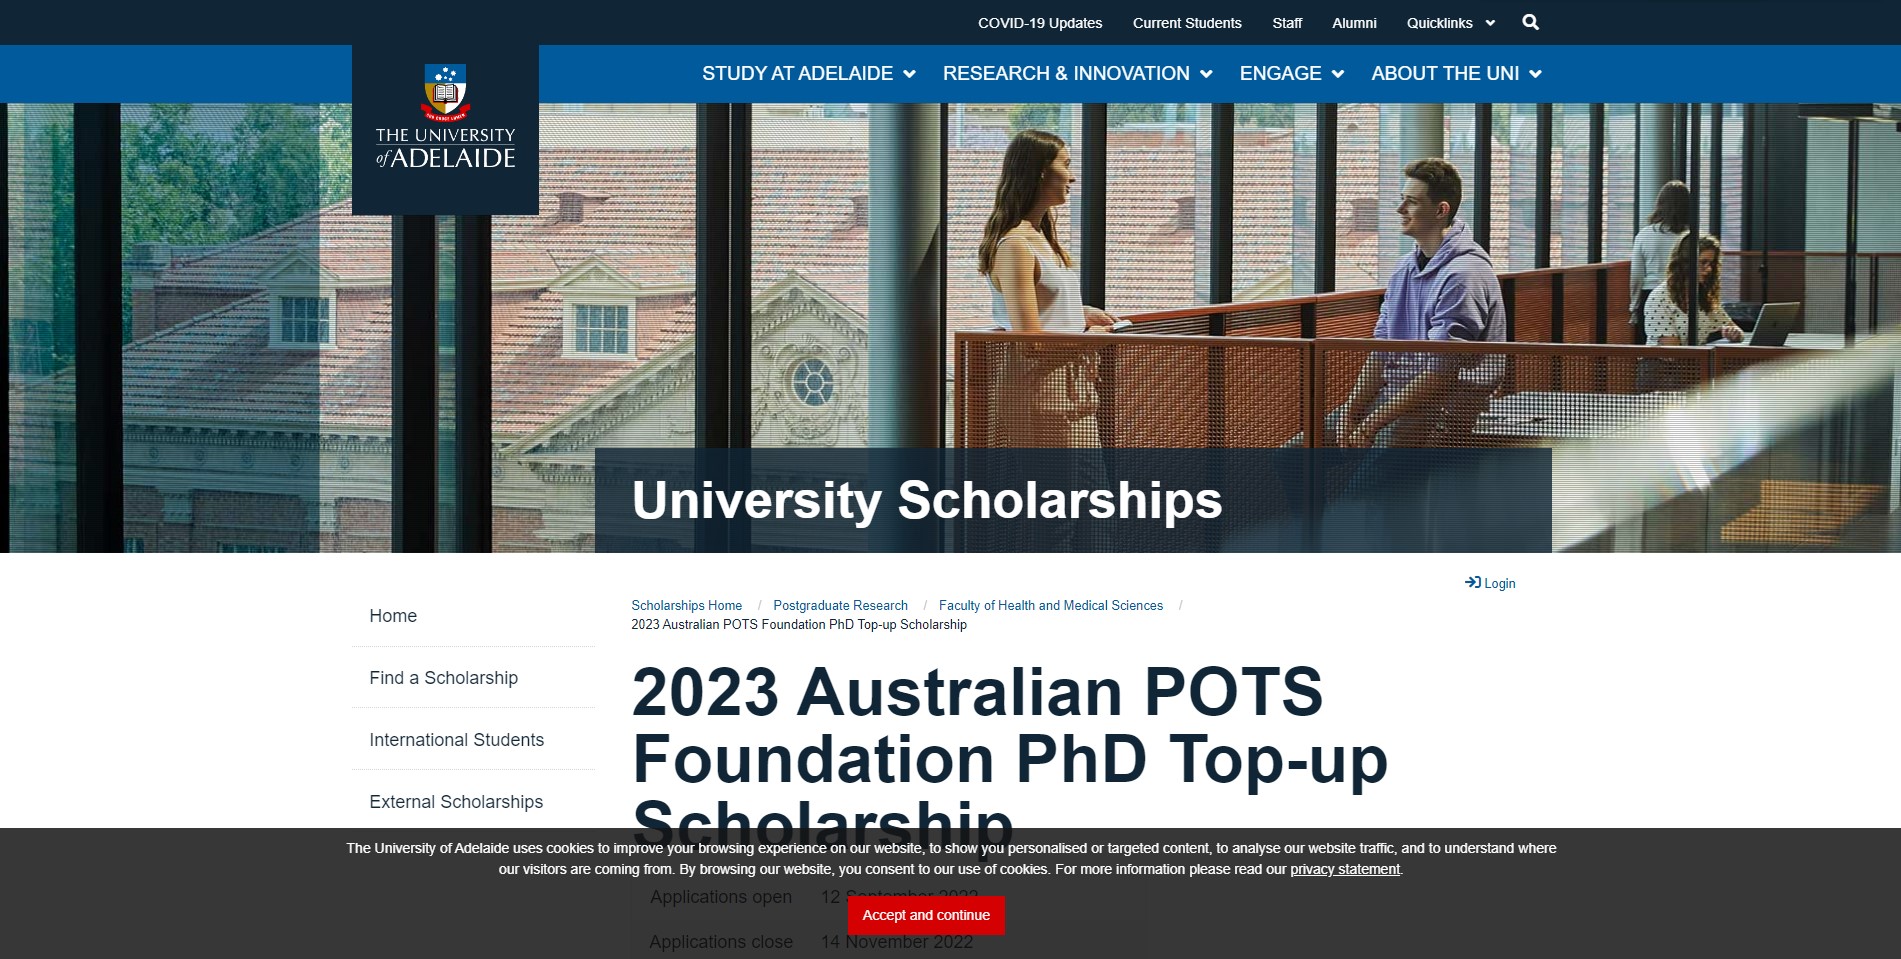 http://www.ishallwin.com/Content/ScholarshipImages/University of Adelaide banner.jpg